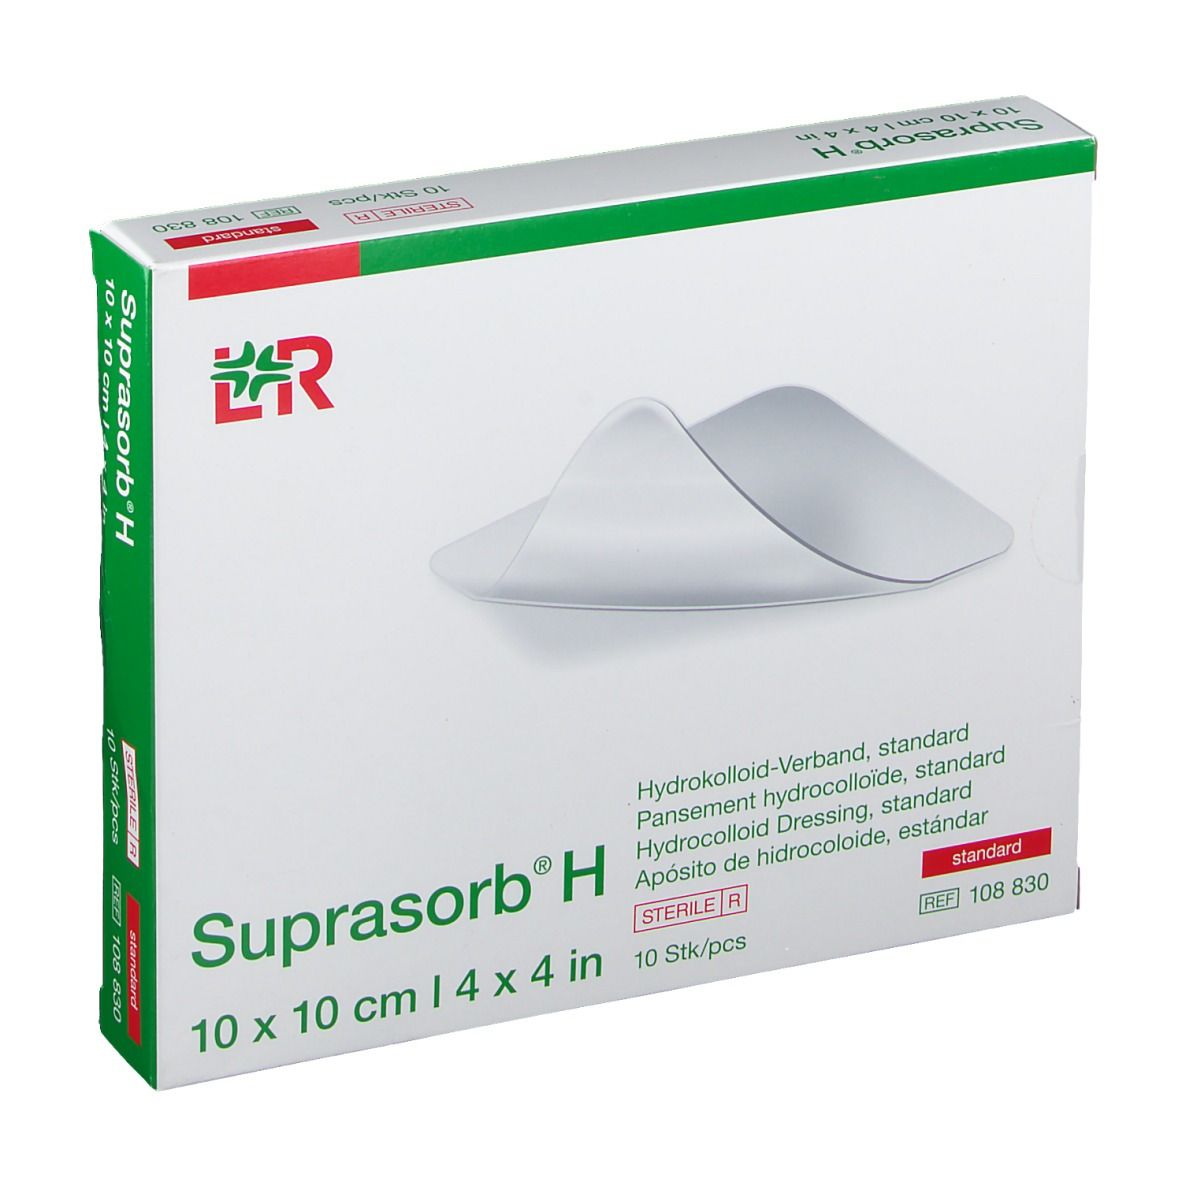 Suprasorb® H Hydrokolloid-Verband Standard 10 x 10 cm